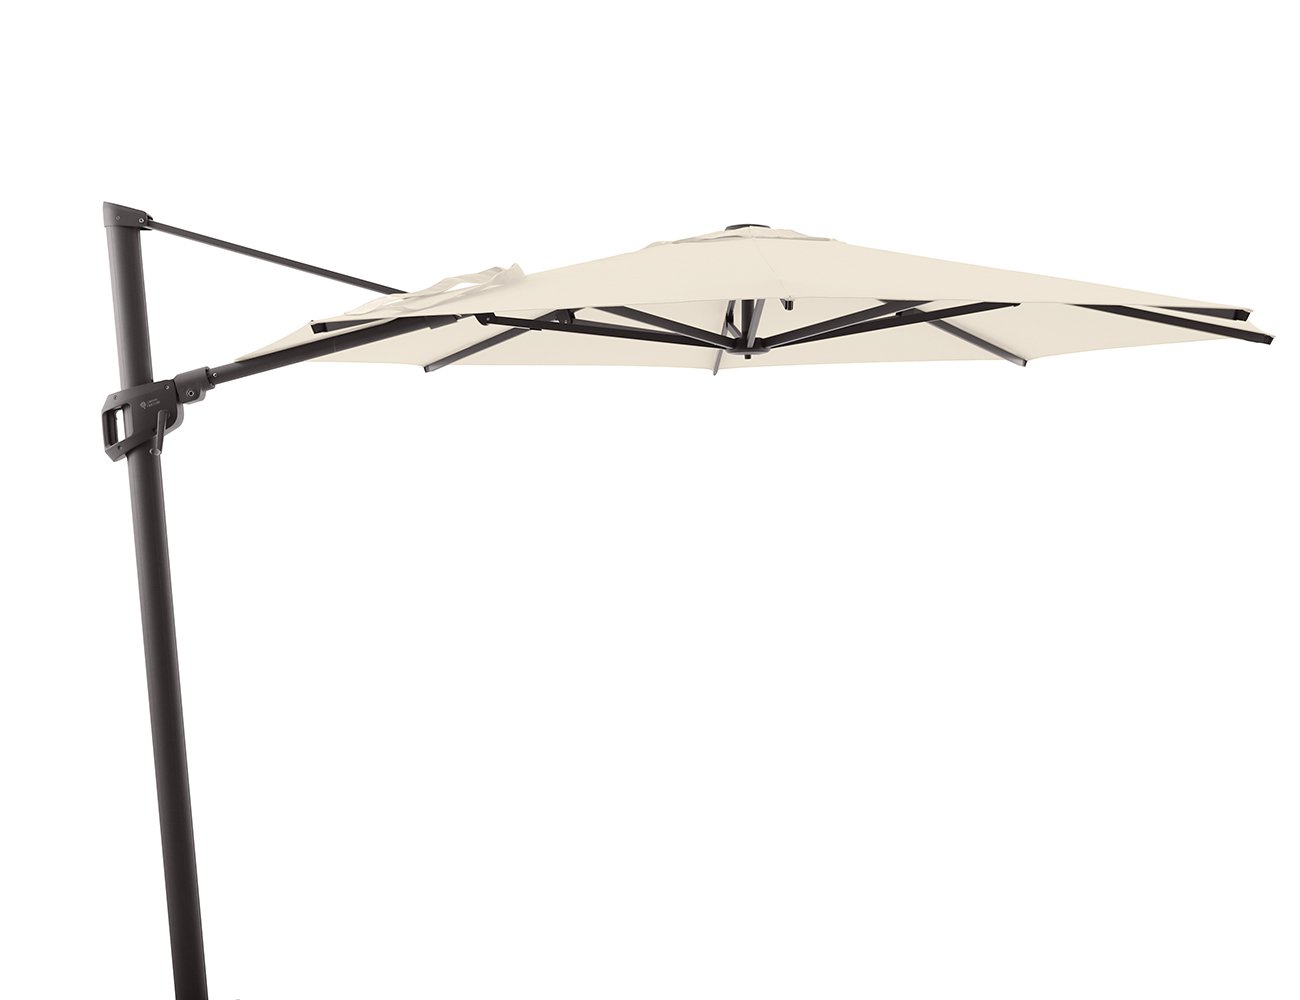 3m Cantilever Octagonal Umbrella - Beige